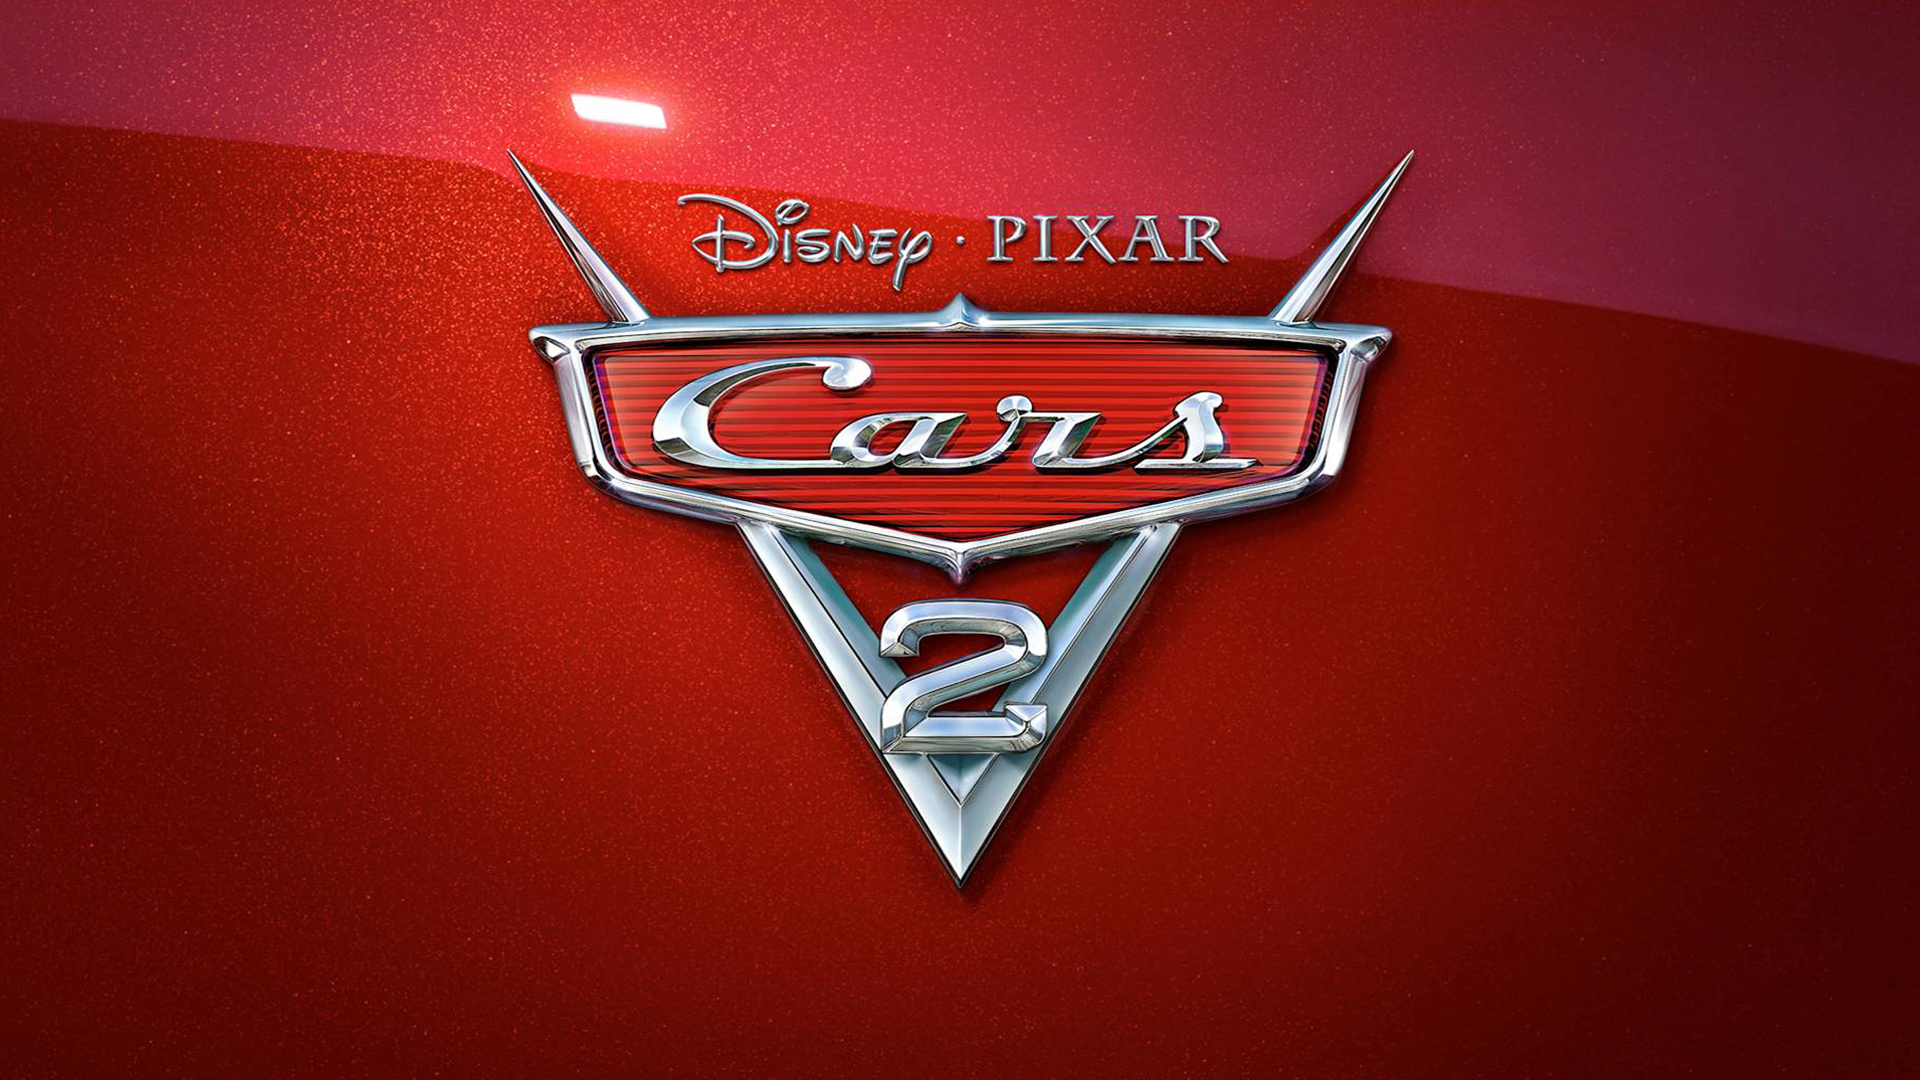 Disney Pixar Cars Wallpaper HD